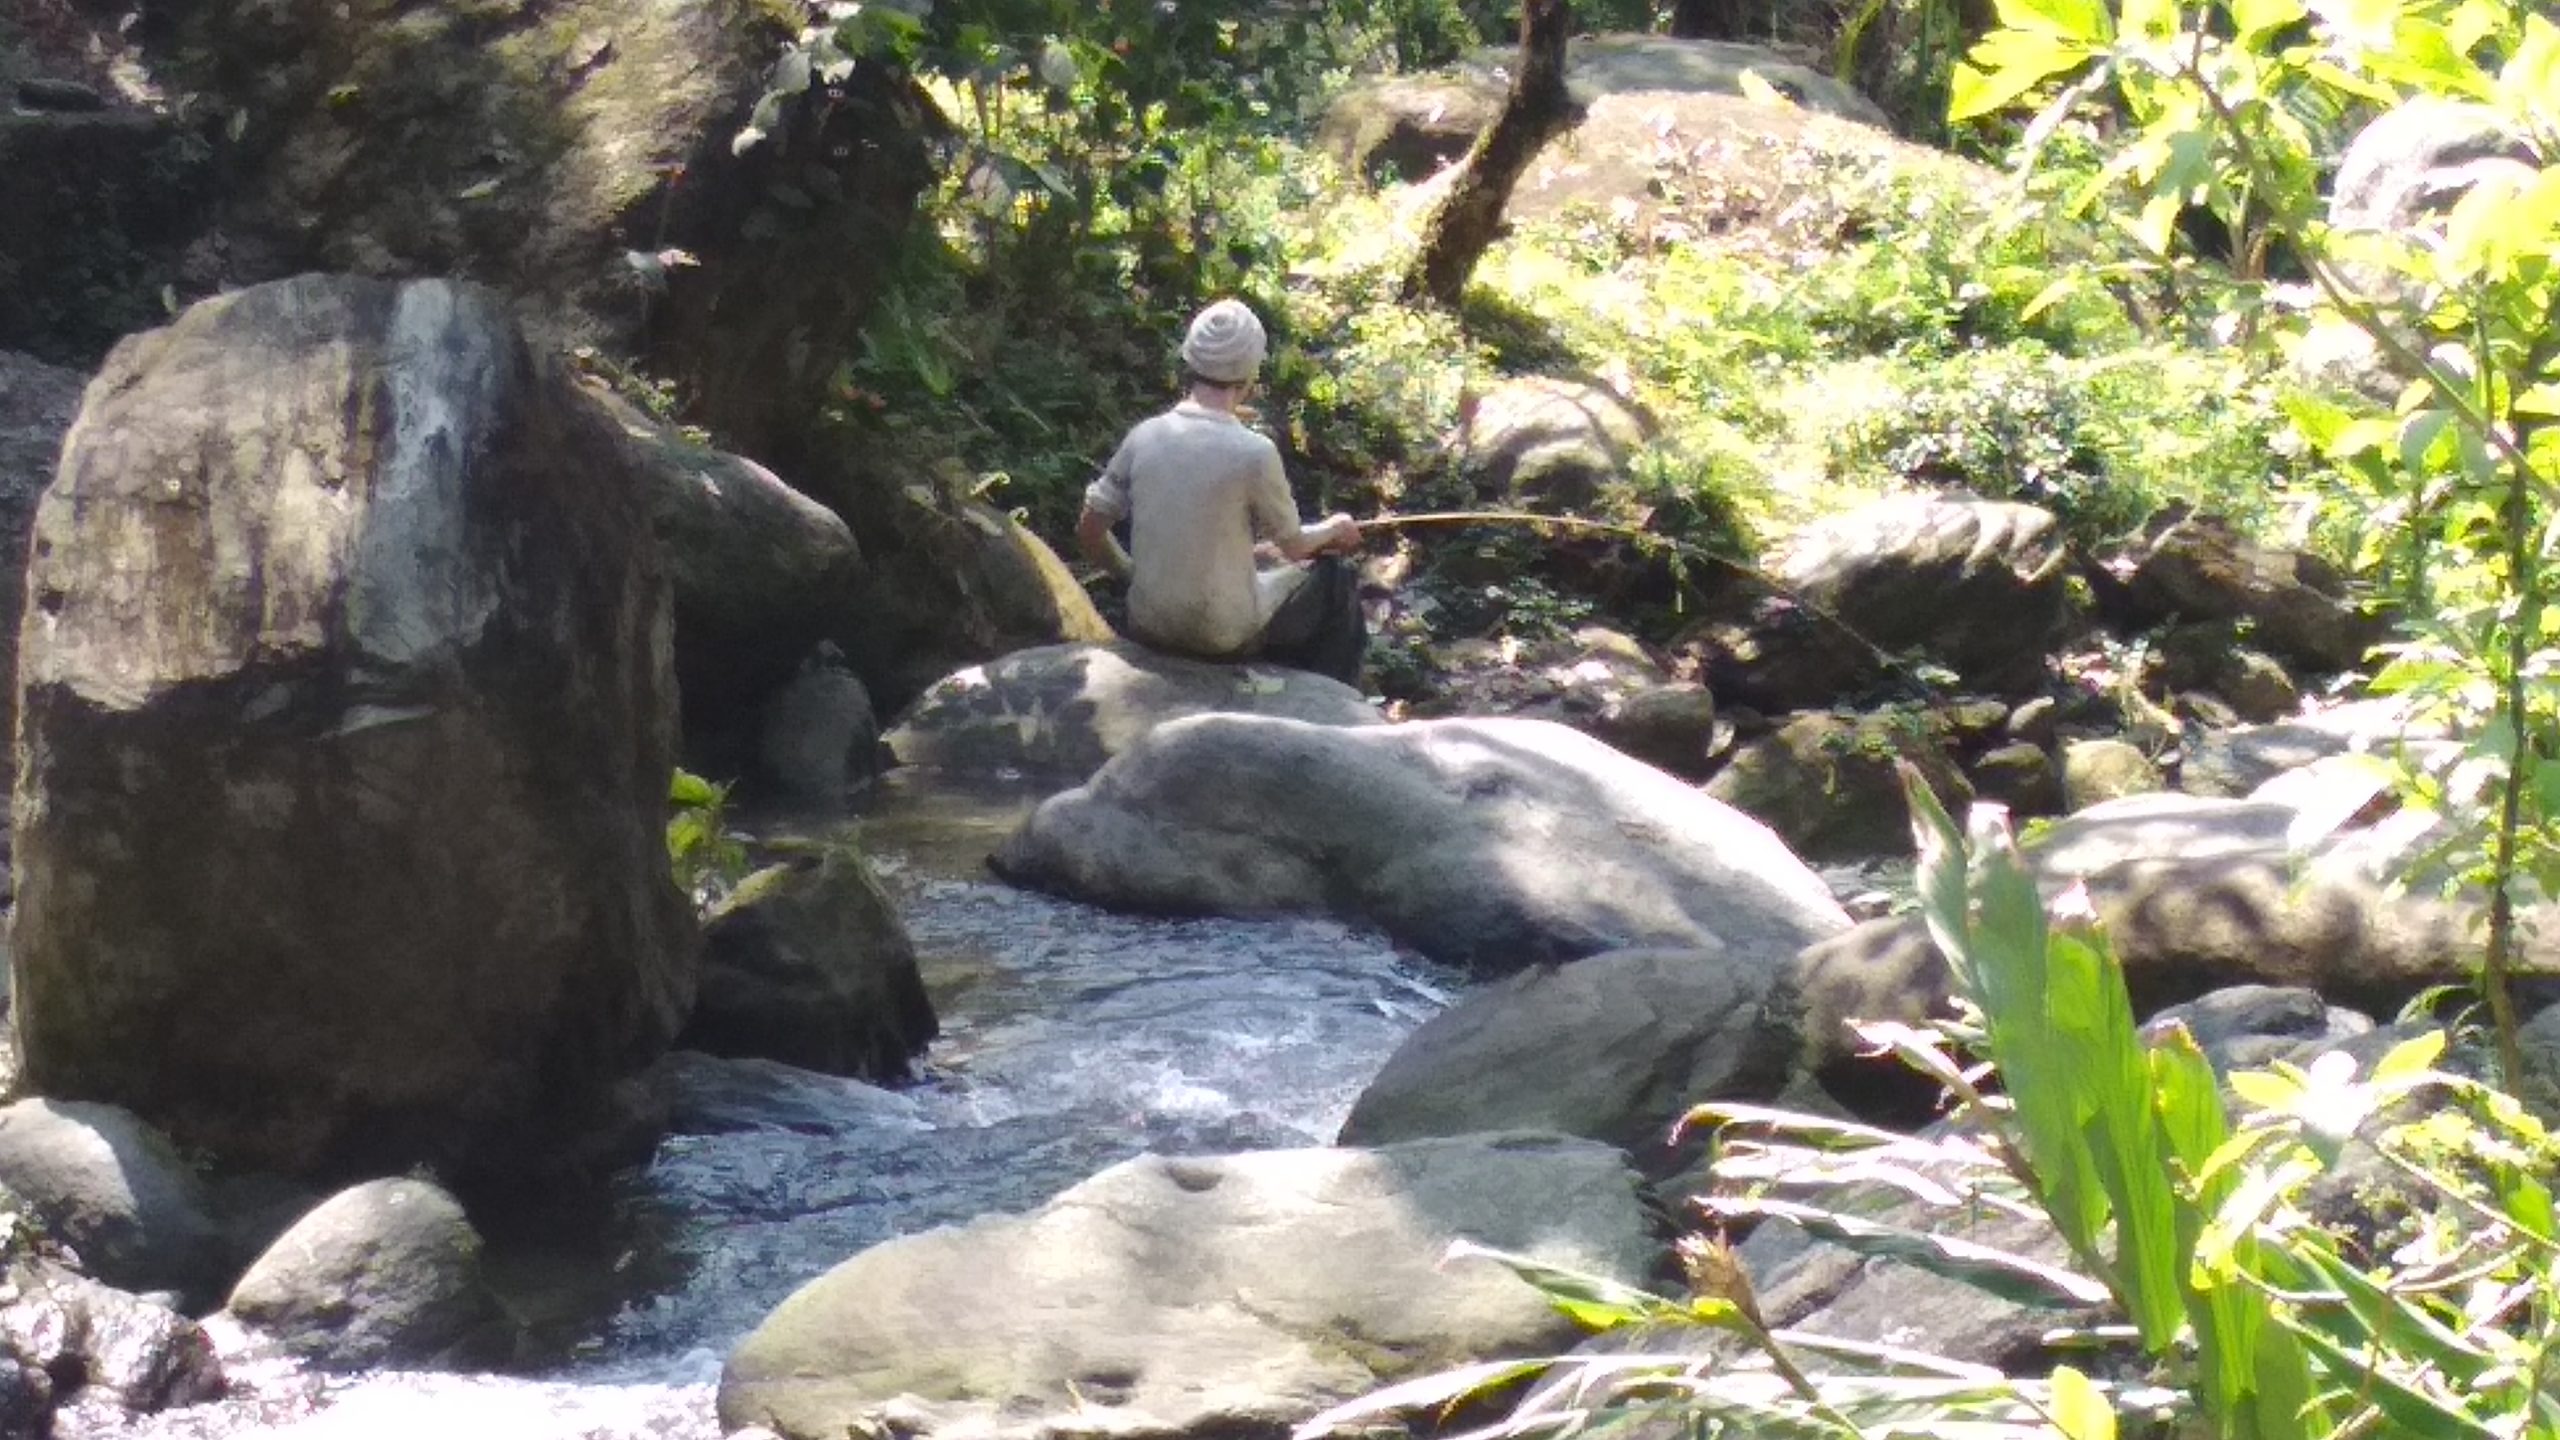 A man fishing in a creek